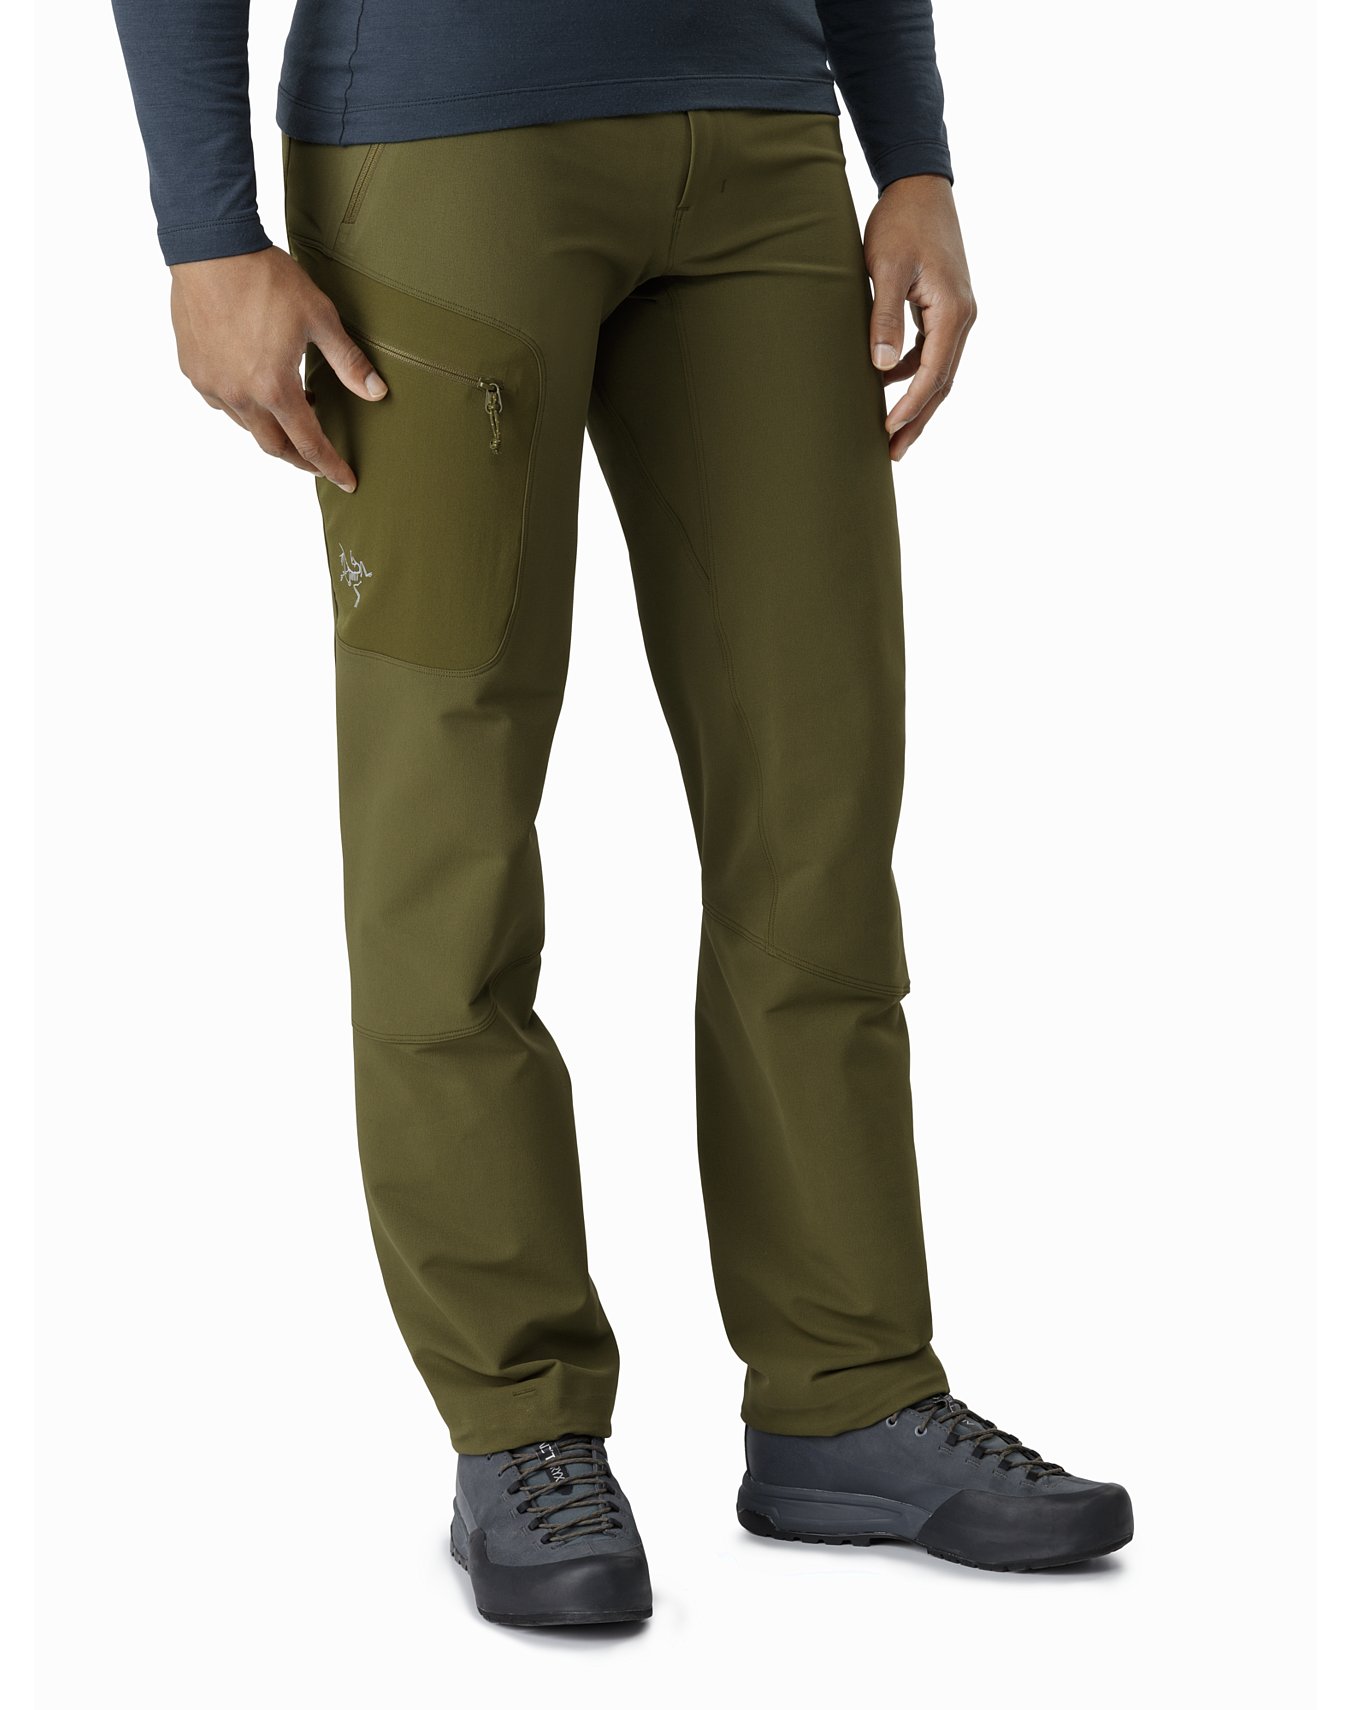 Arc'teryx Gamma AR Pant, men's, discontinued Fall 2019 colors (free ...